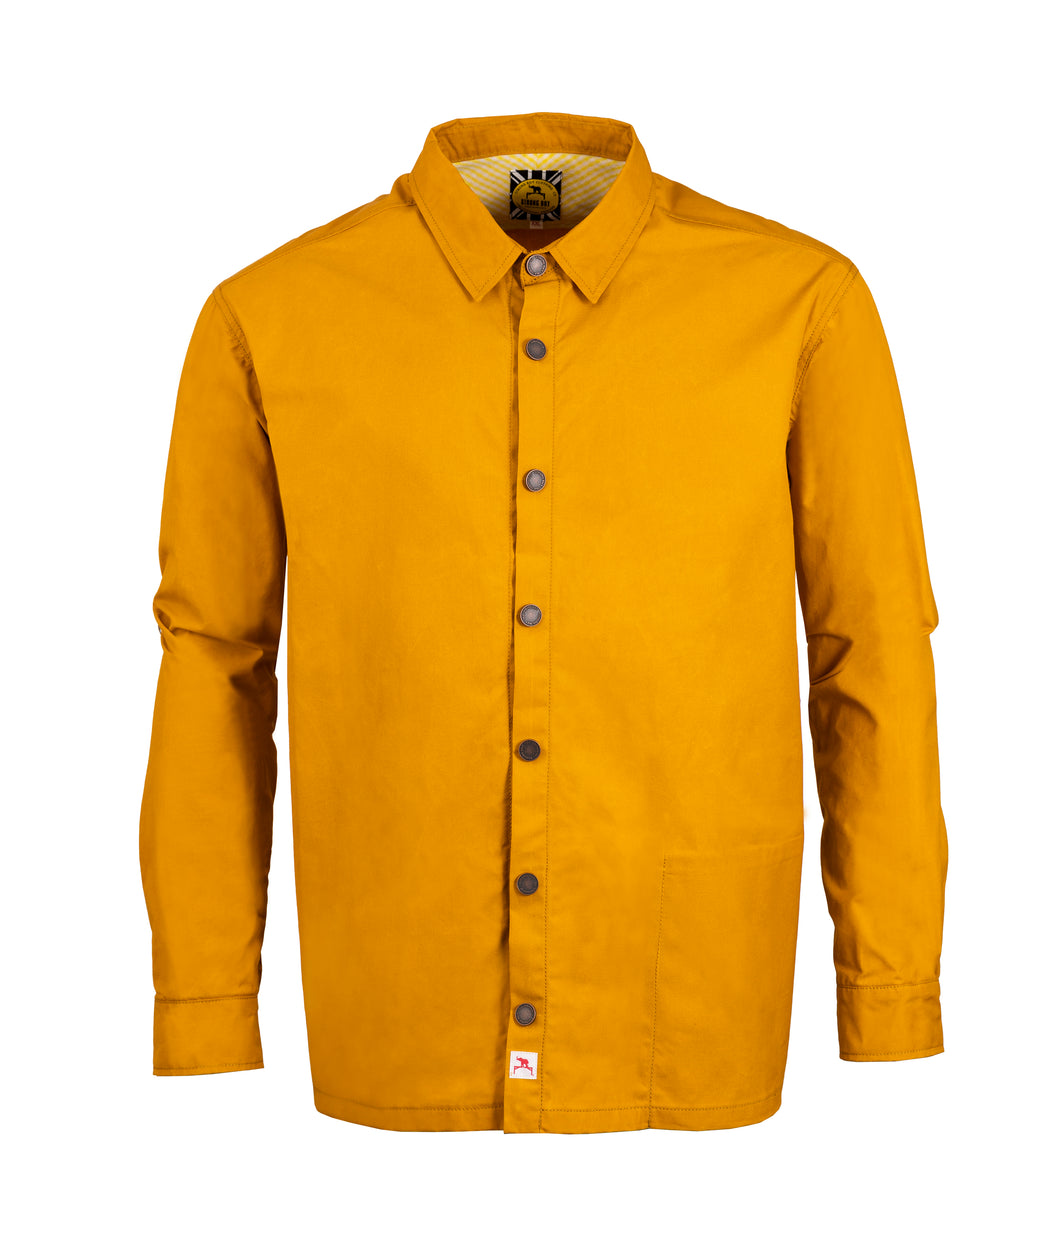 The Craftsman Overshirt in Yellow Tan